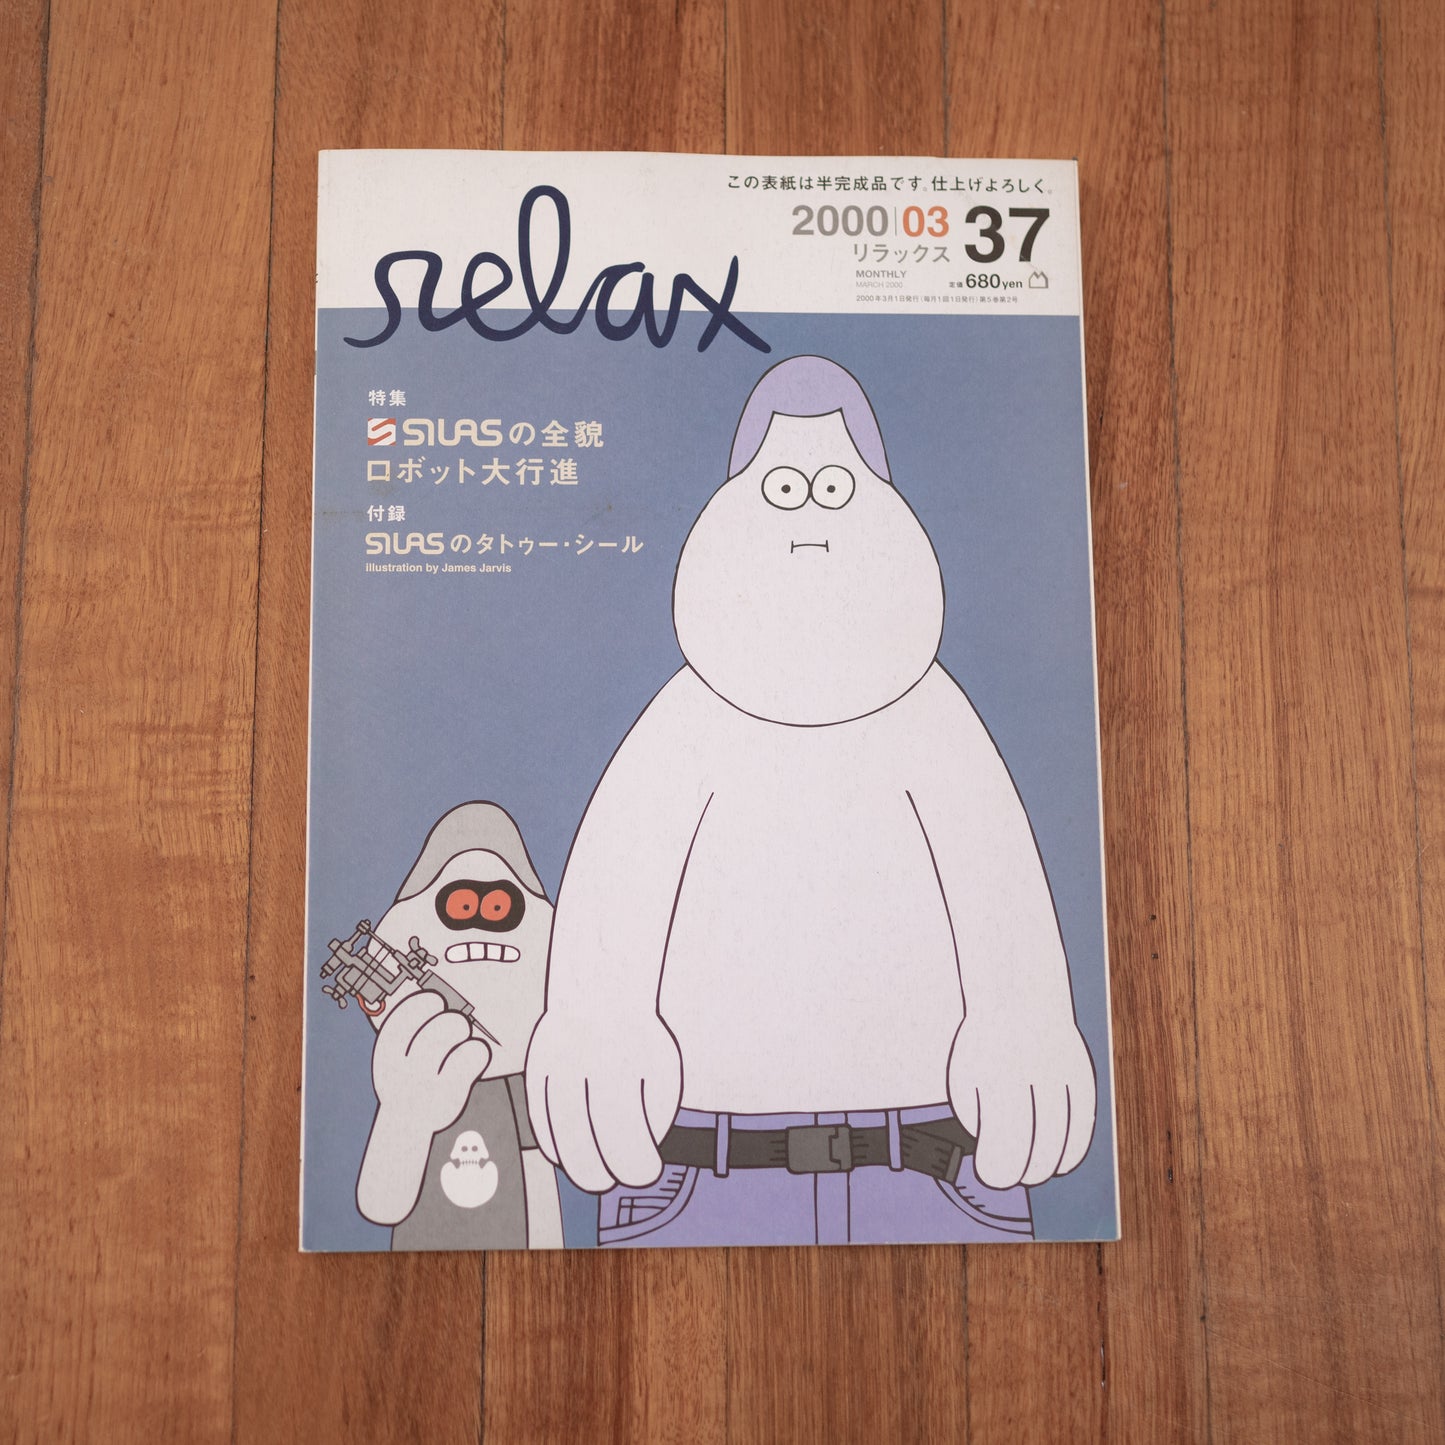 Relax Magazine Vol. 37 (2000/03)